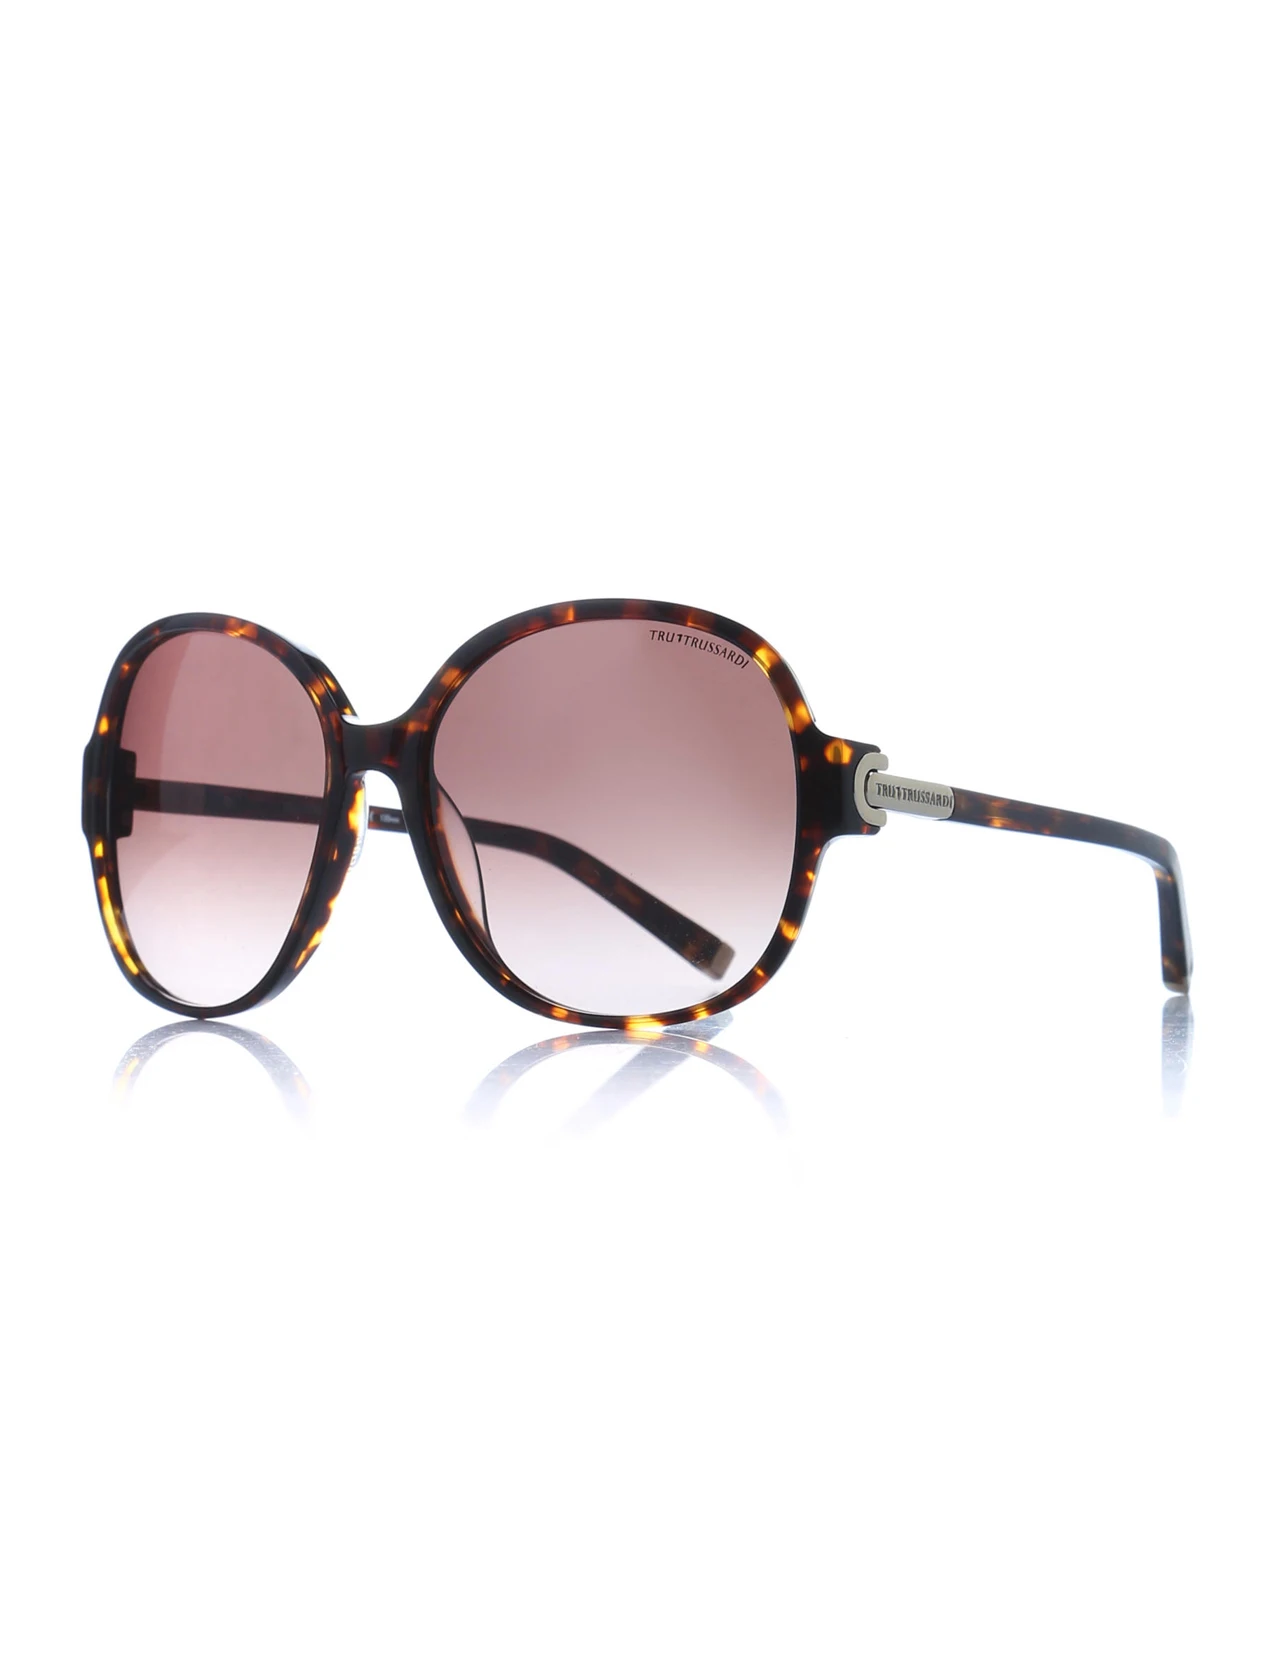 

Women's sunglasses trs 128 30 tt bone Brown organic oval aval 58-17-130 trussardi